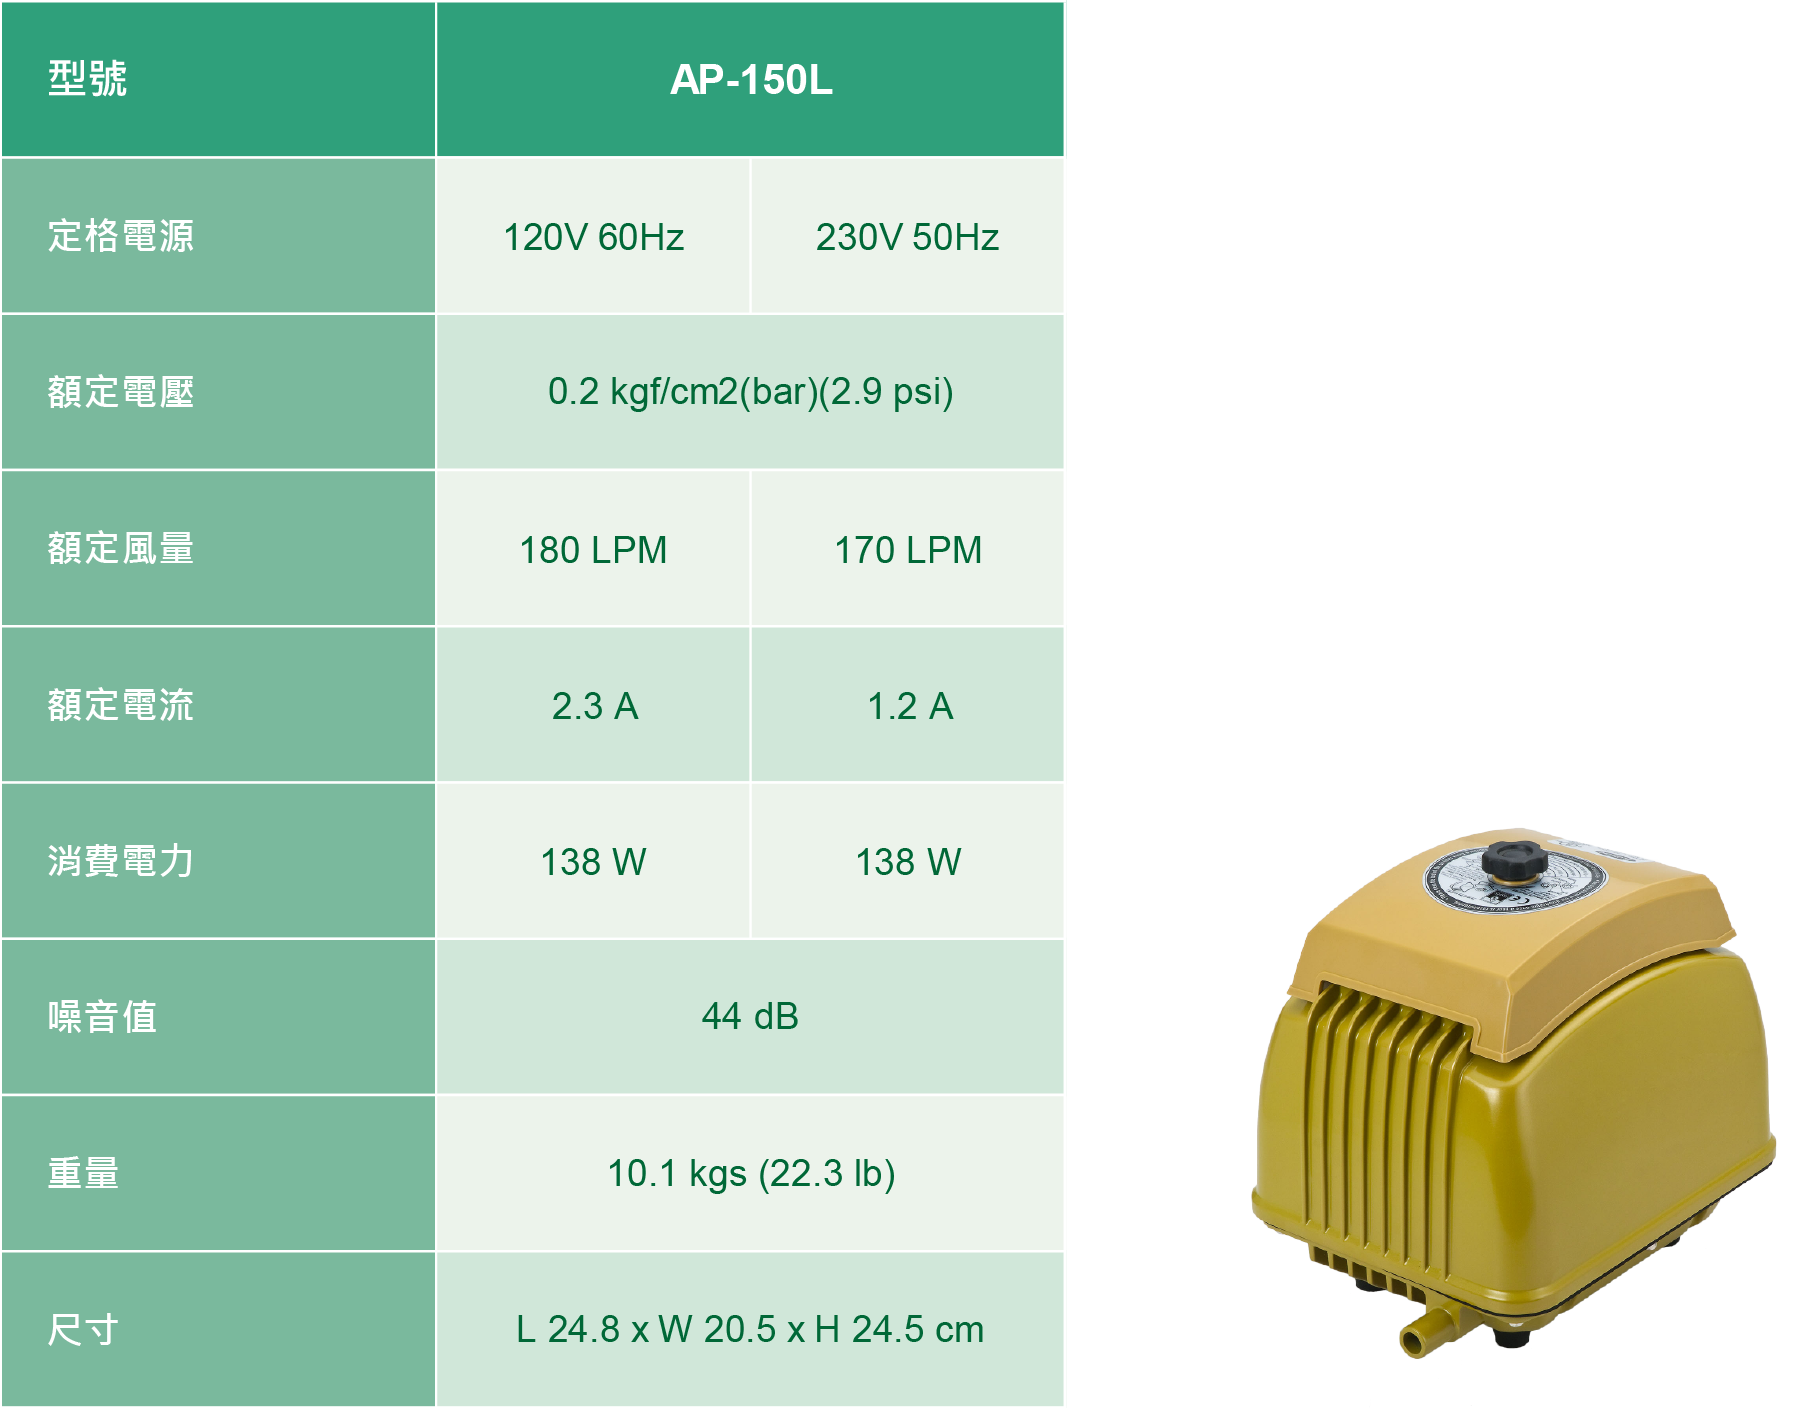 Linear Air Pumps AP-150L Performance